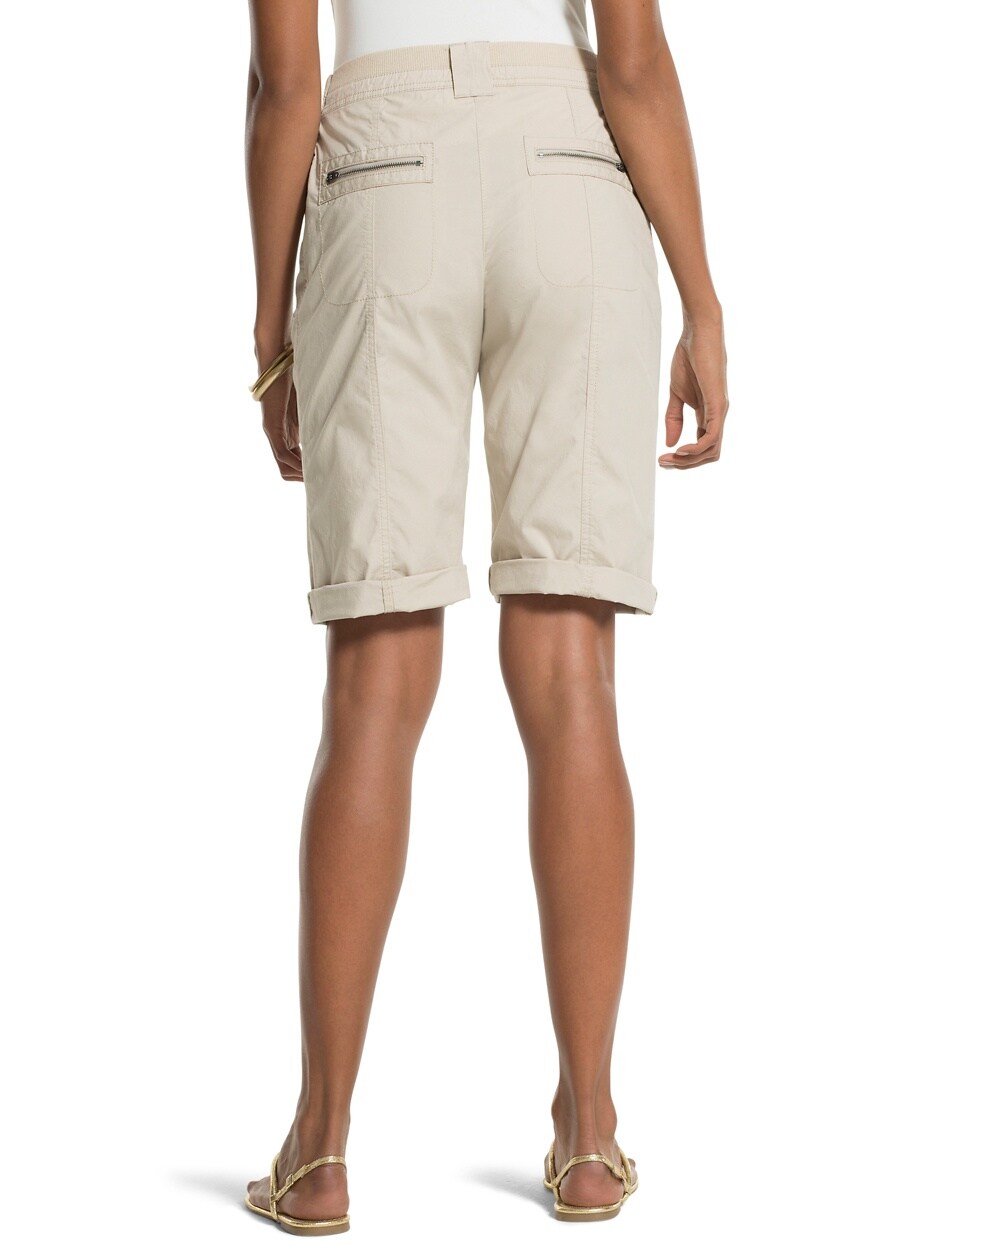 Cool Cotton Shorts - 11-inch inseam - Chico's